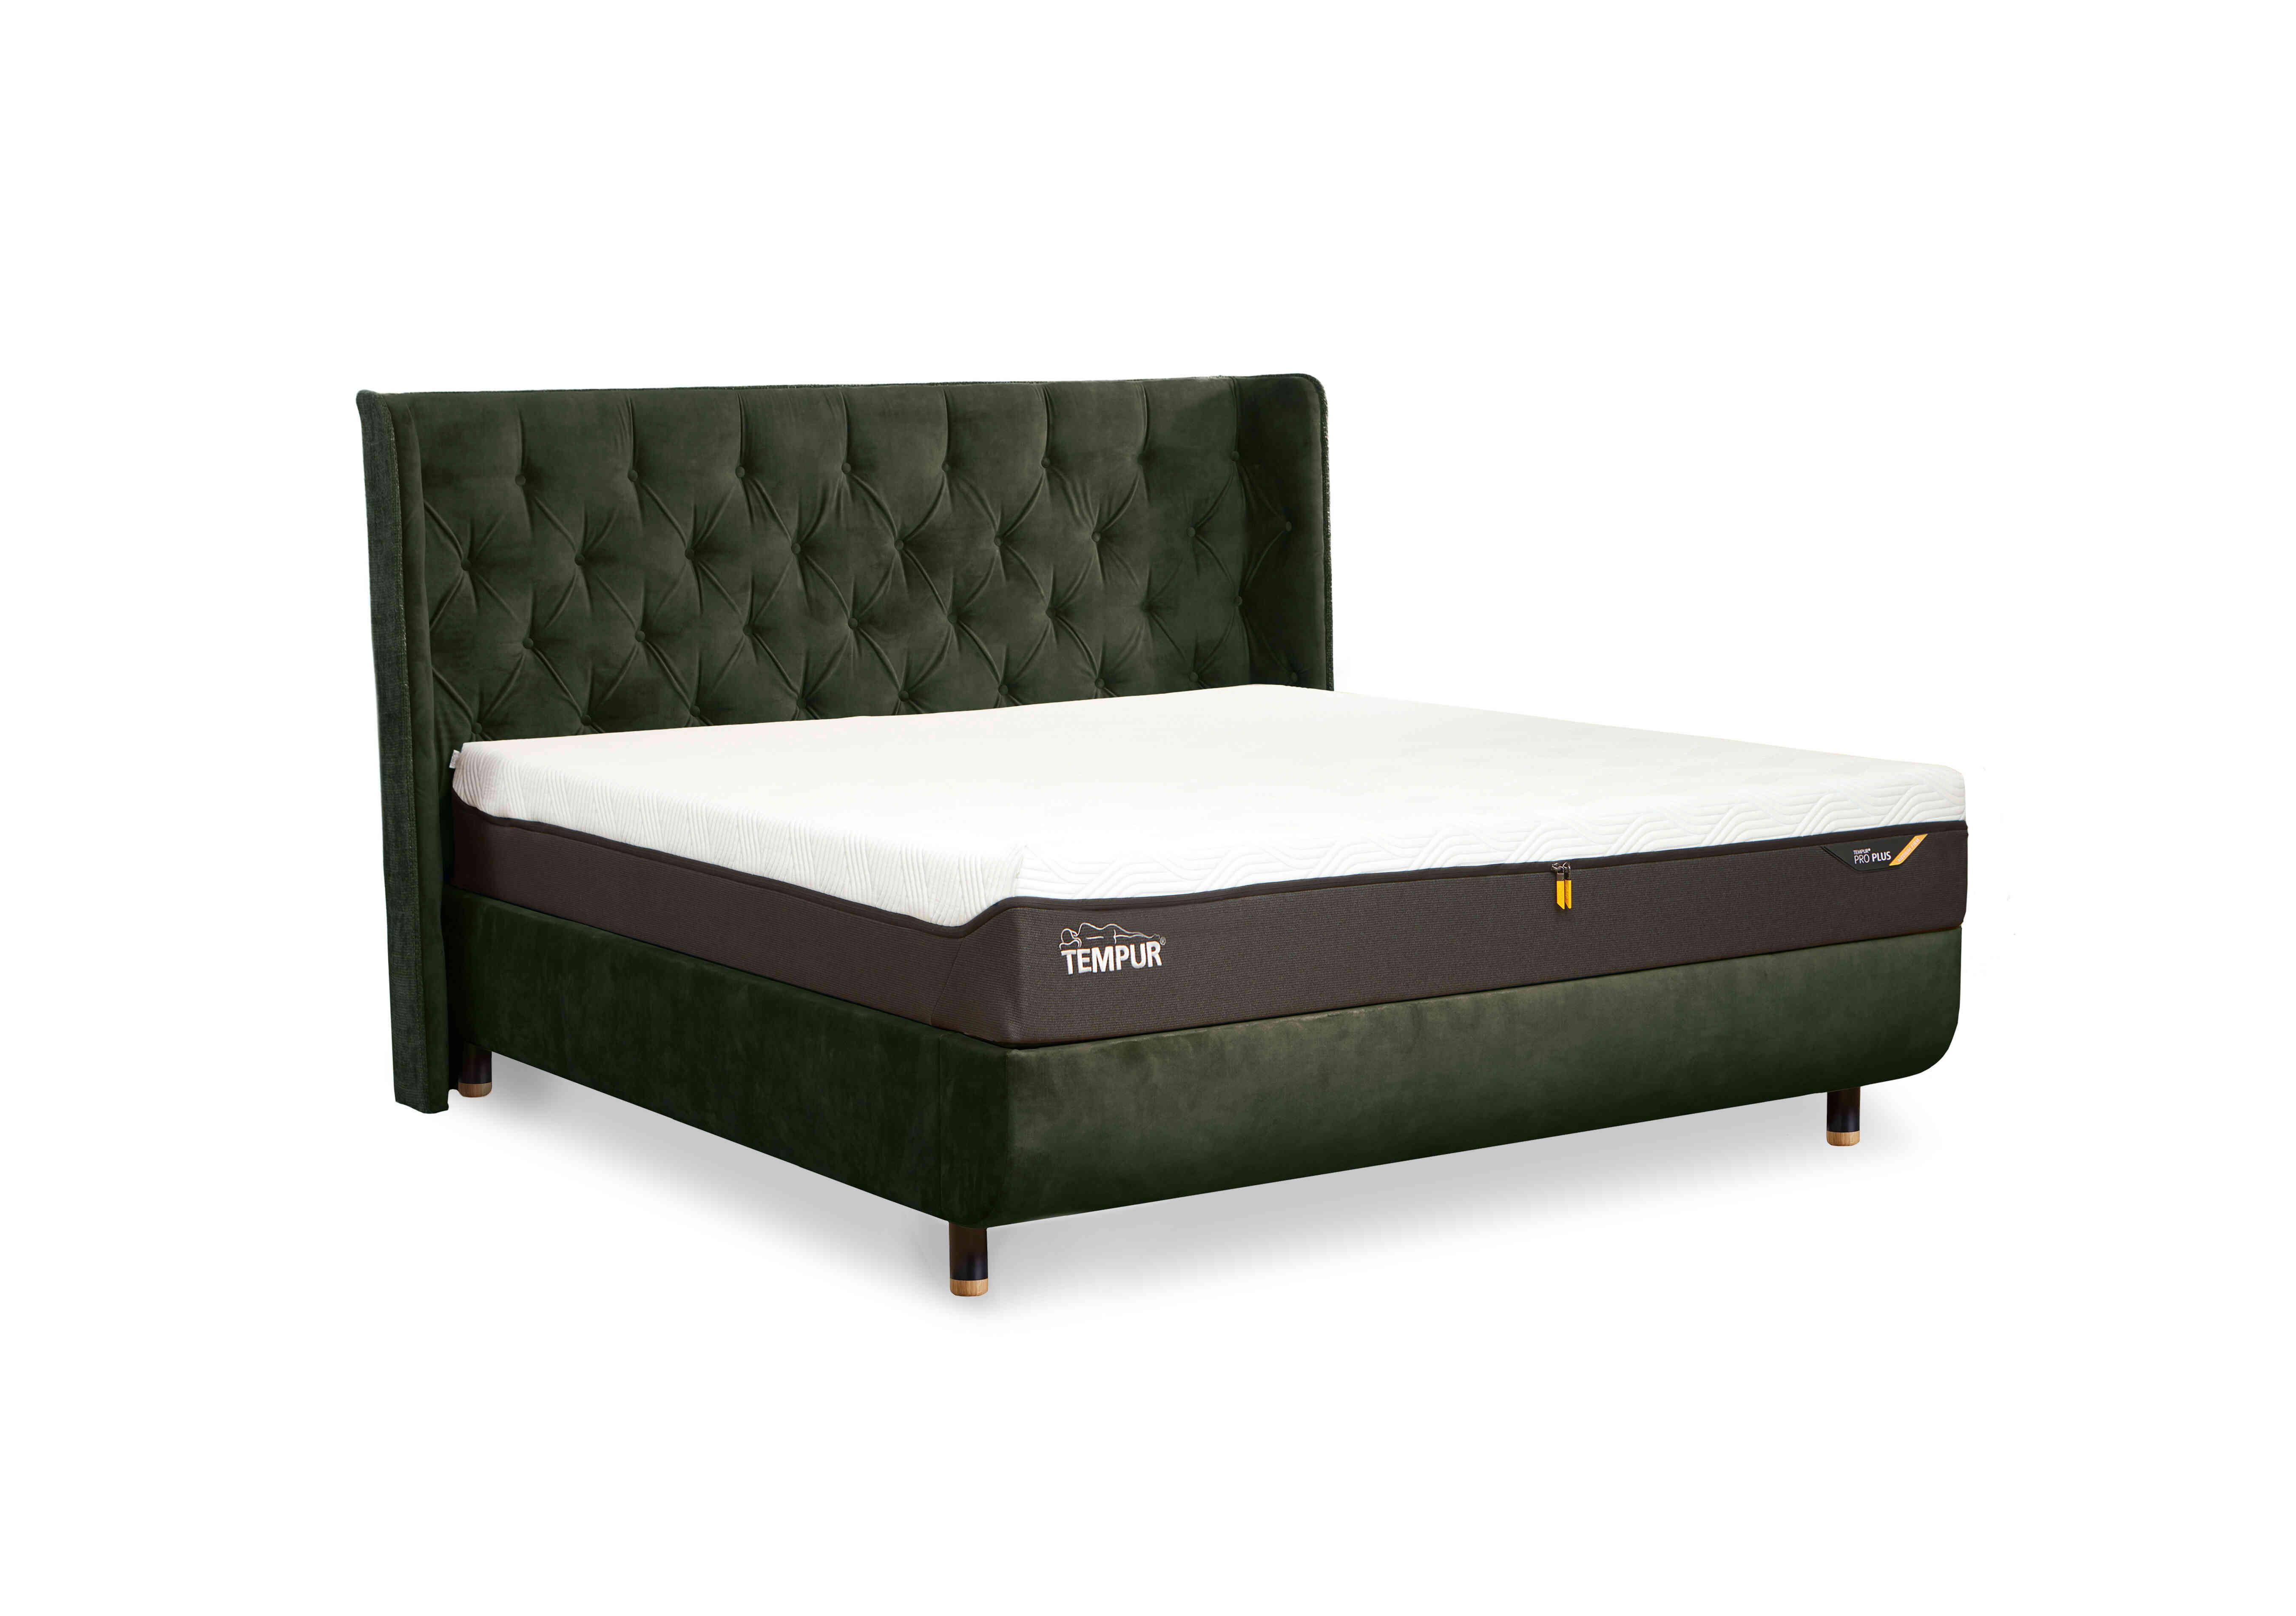 Arc Slatted Ottoman Bed Frame with Luxury Headboard in Dk Green/For Green-Blk/Oak Ft on Furniture Village